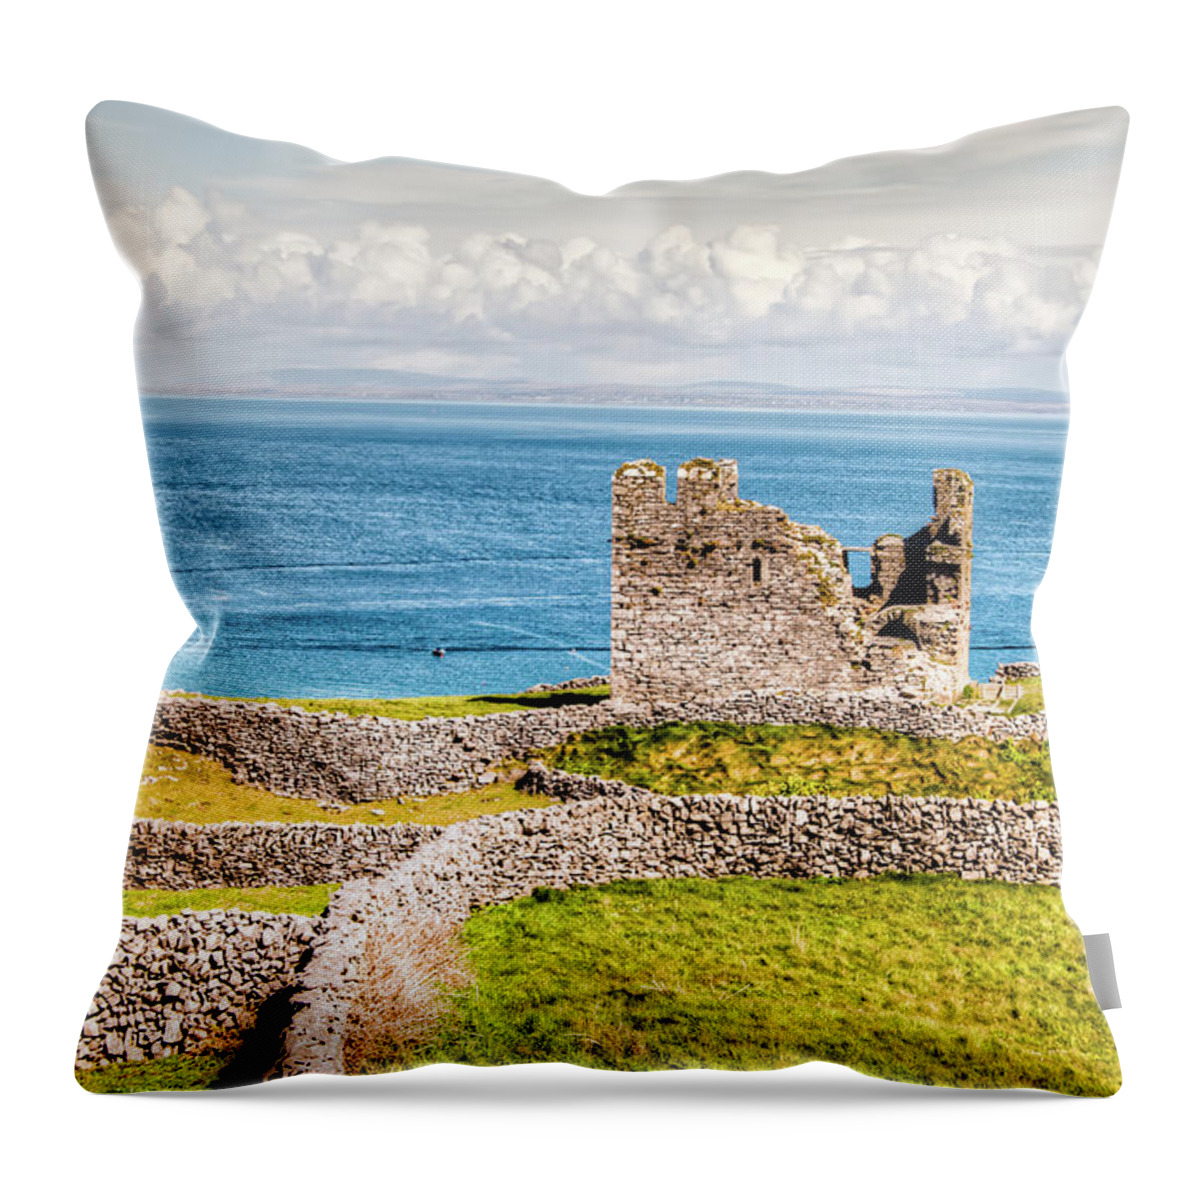 Aran Islands Throw Pillow featuring the photograph An Ancient Irish Castle by Natasha Bishop